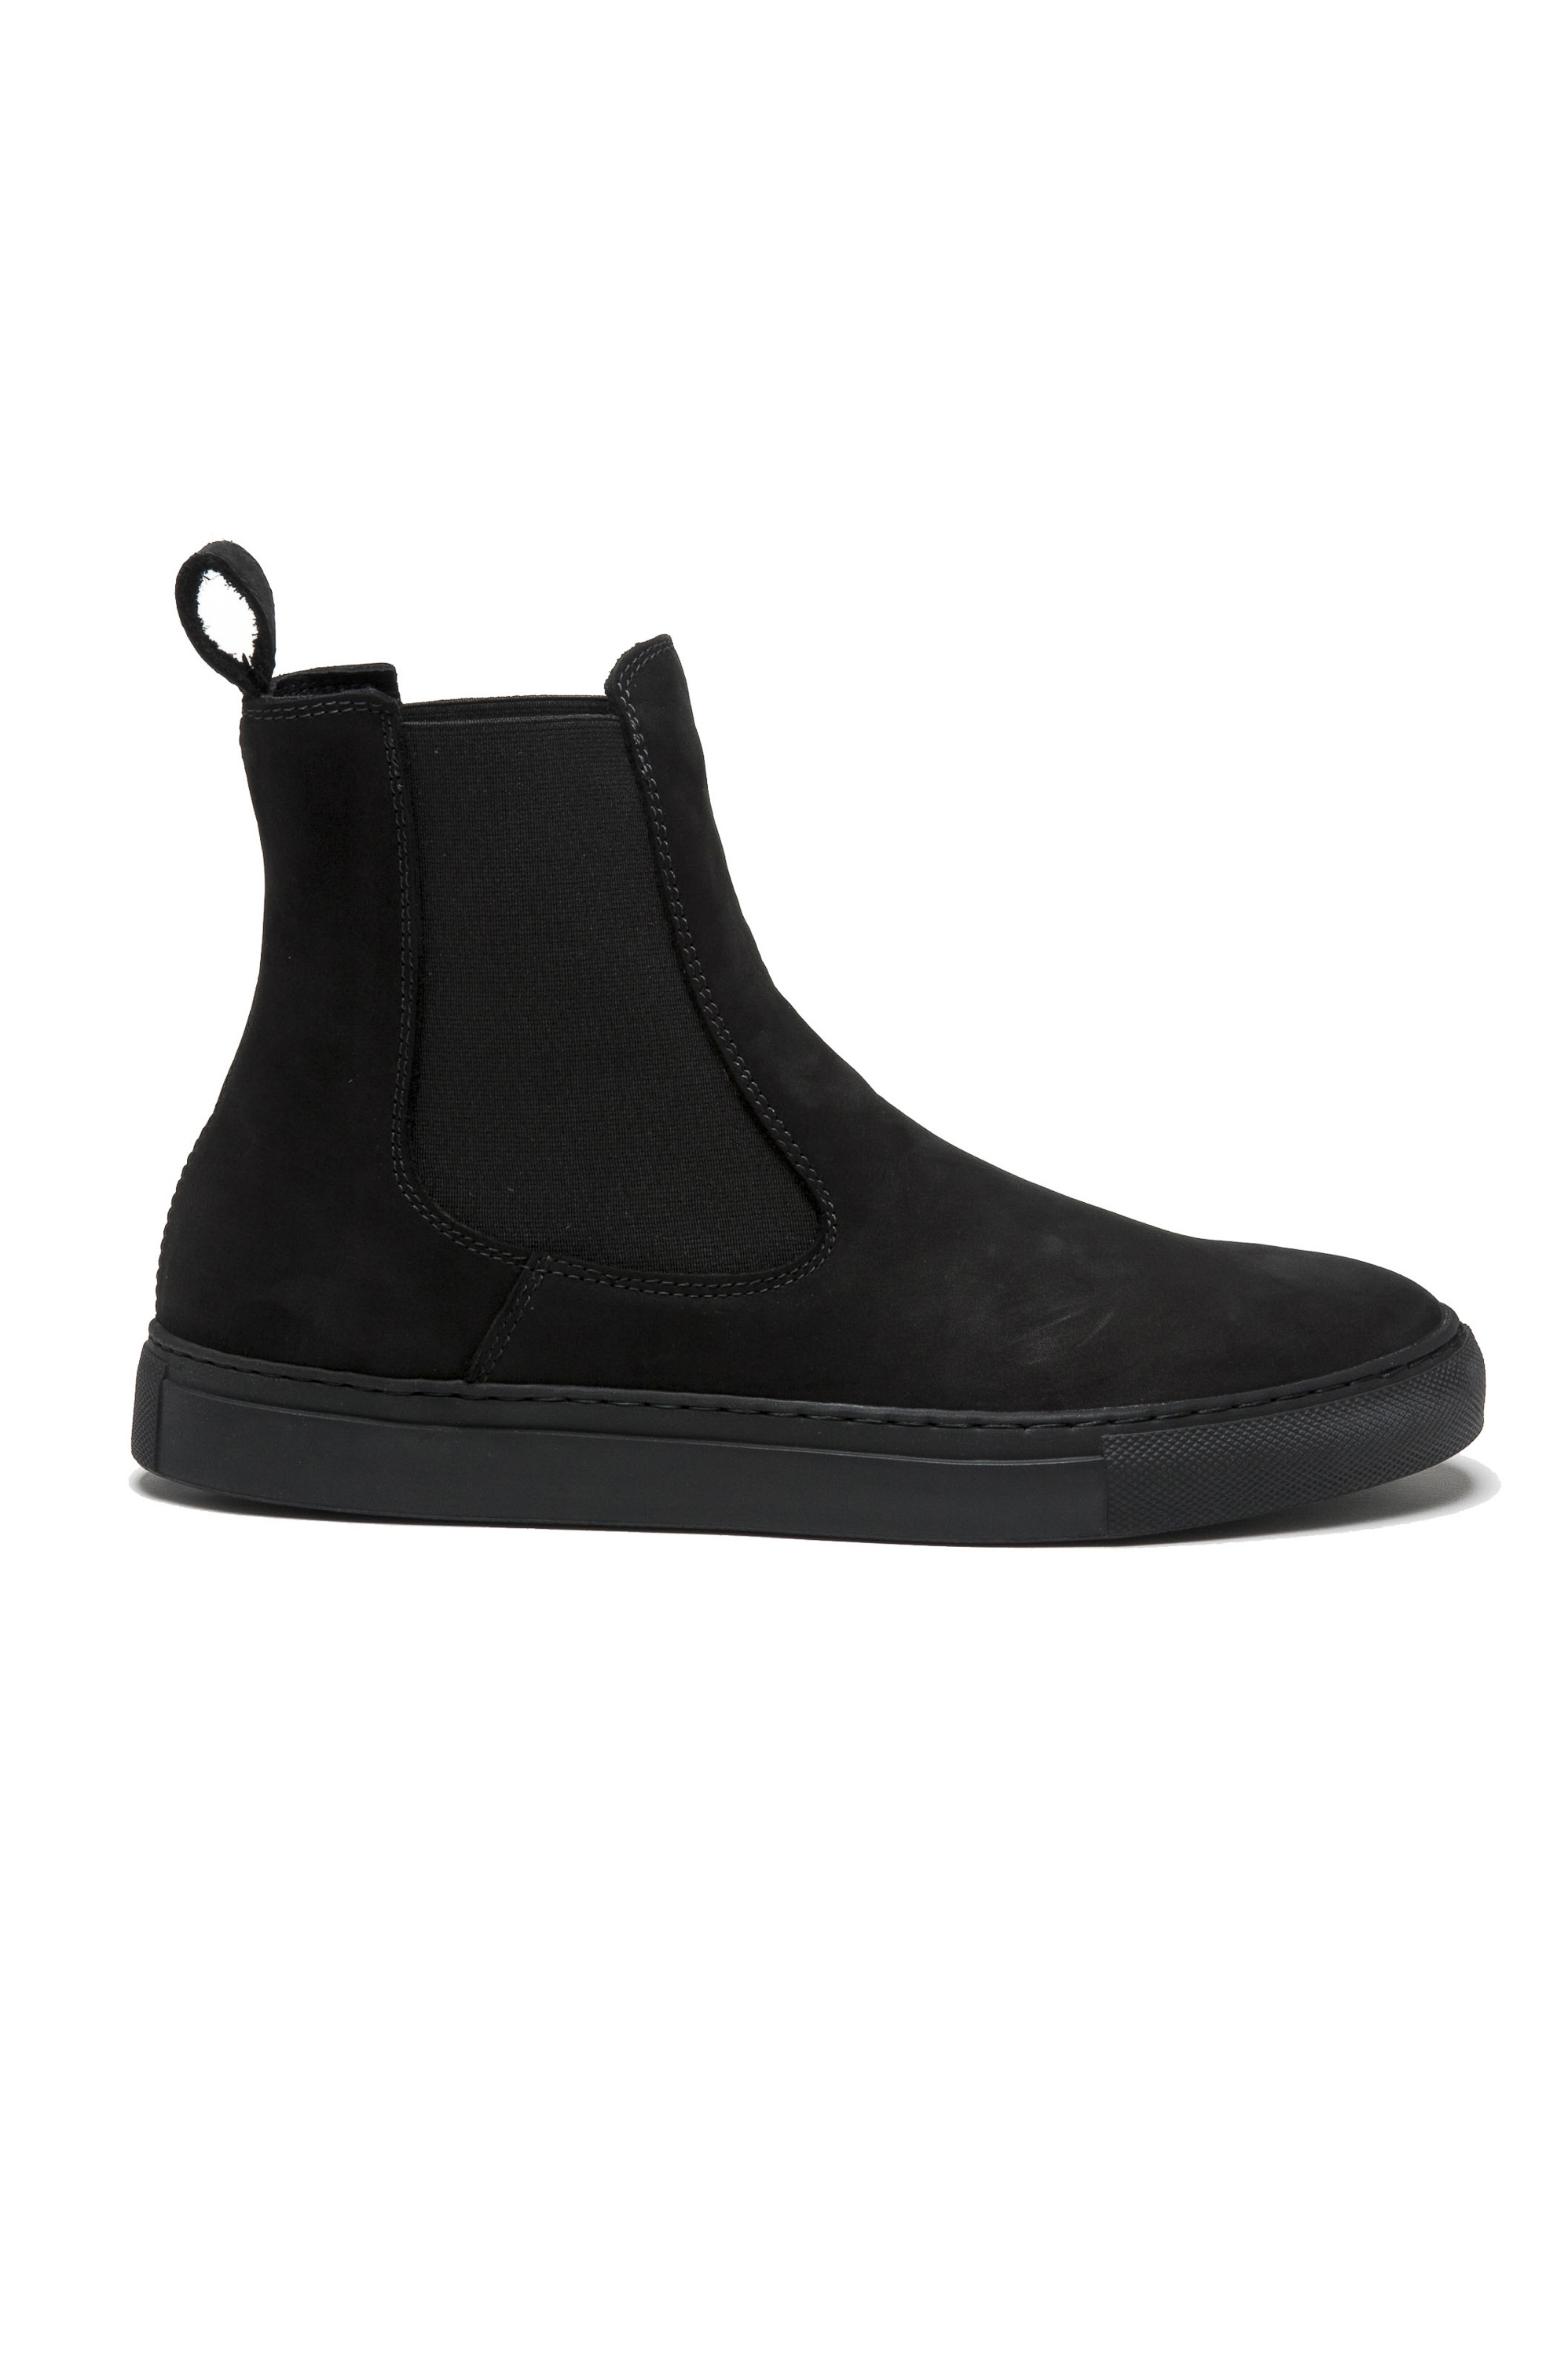 SBU 01506_19AW Classic elastic sided boots in black nubuck calfskin leather 01